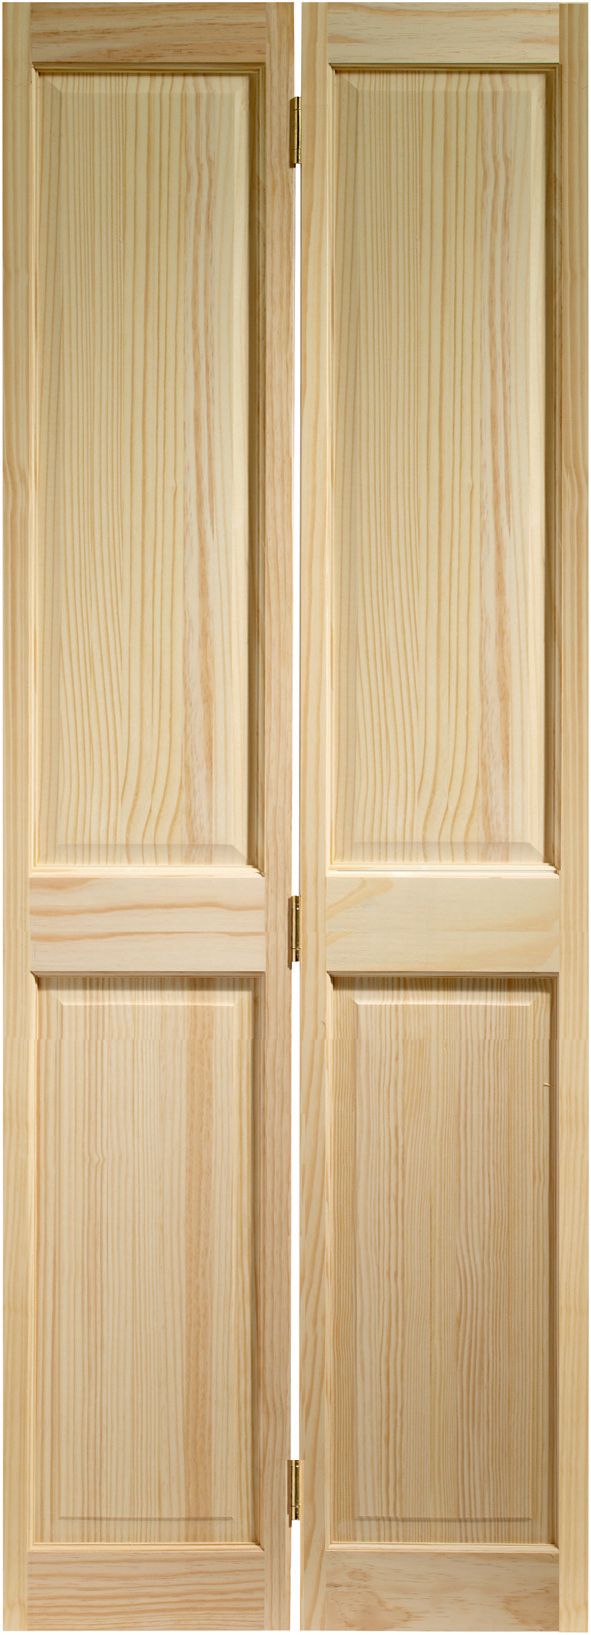 Image of Wickes Skipton Clear Pine 4 Panel Internal Bi-Fold Door - 1981 x 686mm